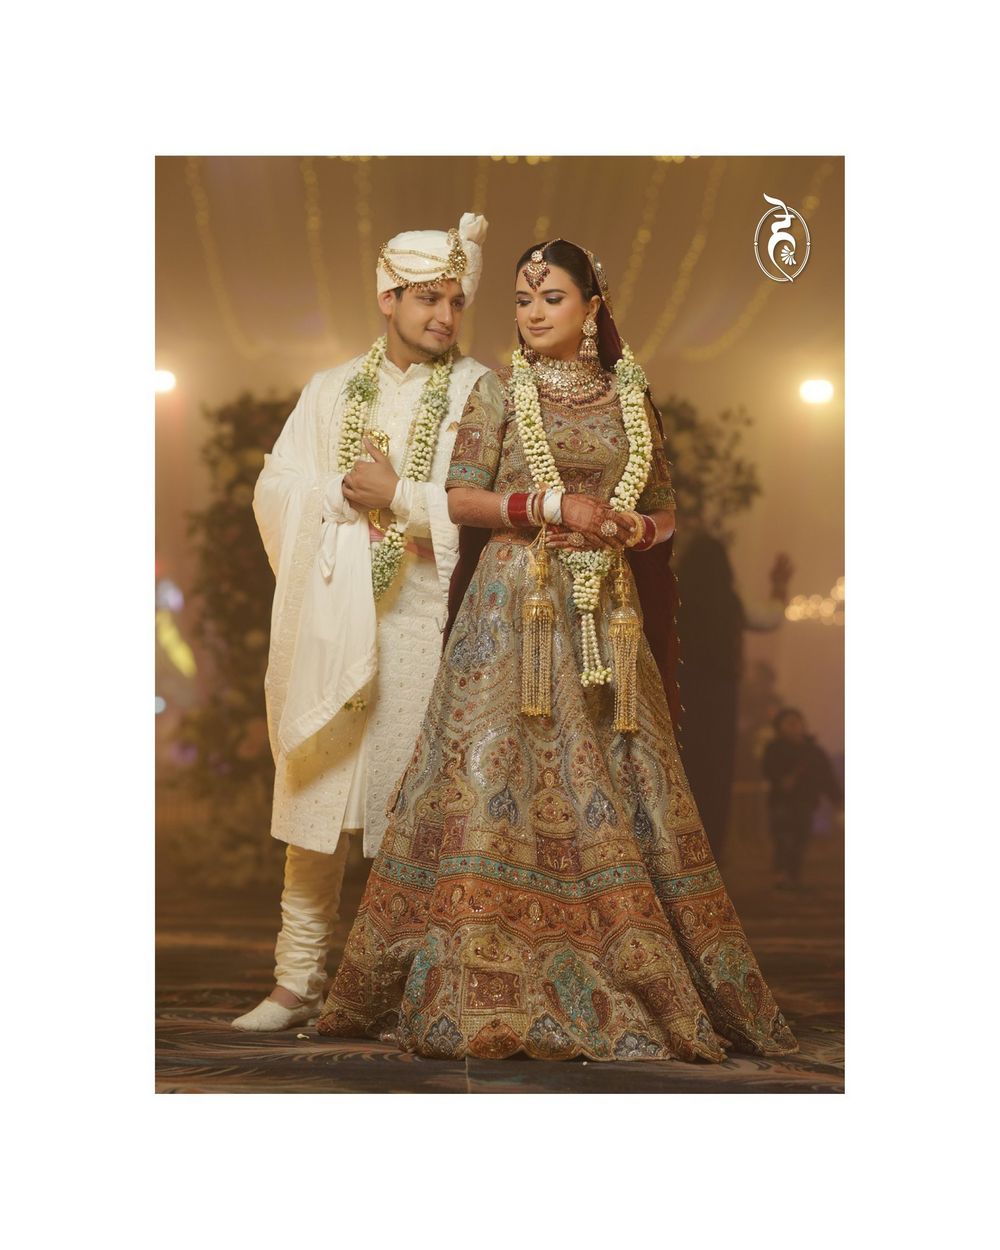 Photo From Celestial Threads: @GabaShreya's Royal Wedding Tale - By Hemant Sarees & Lifestyle